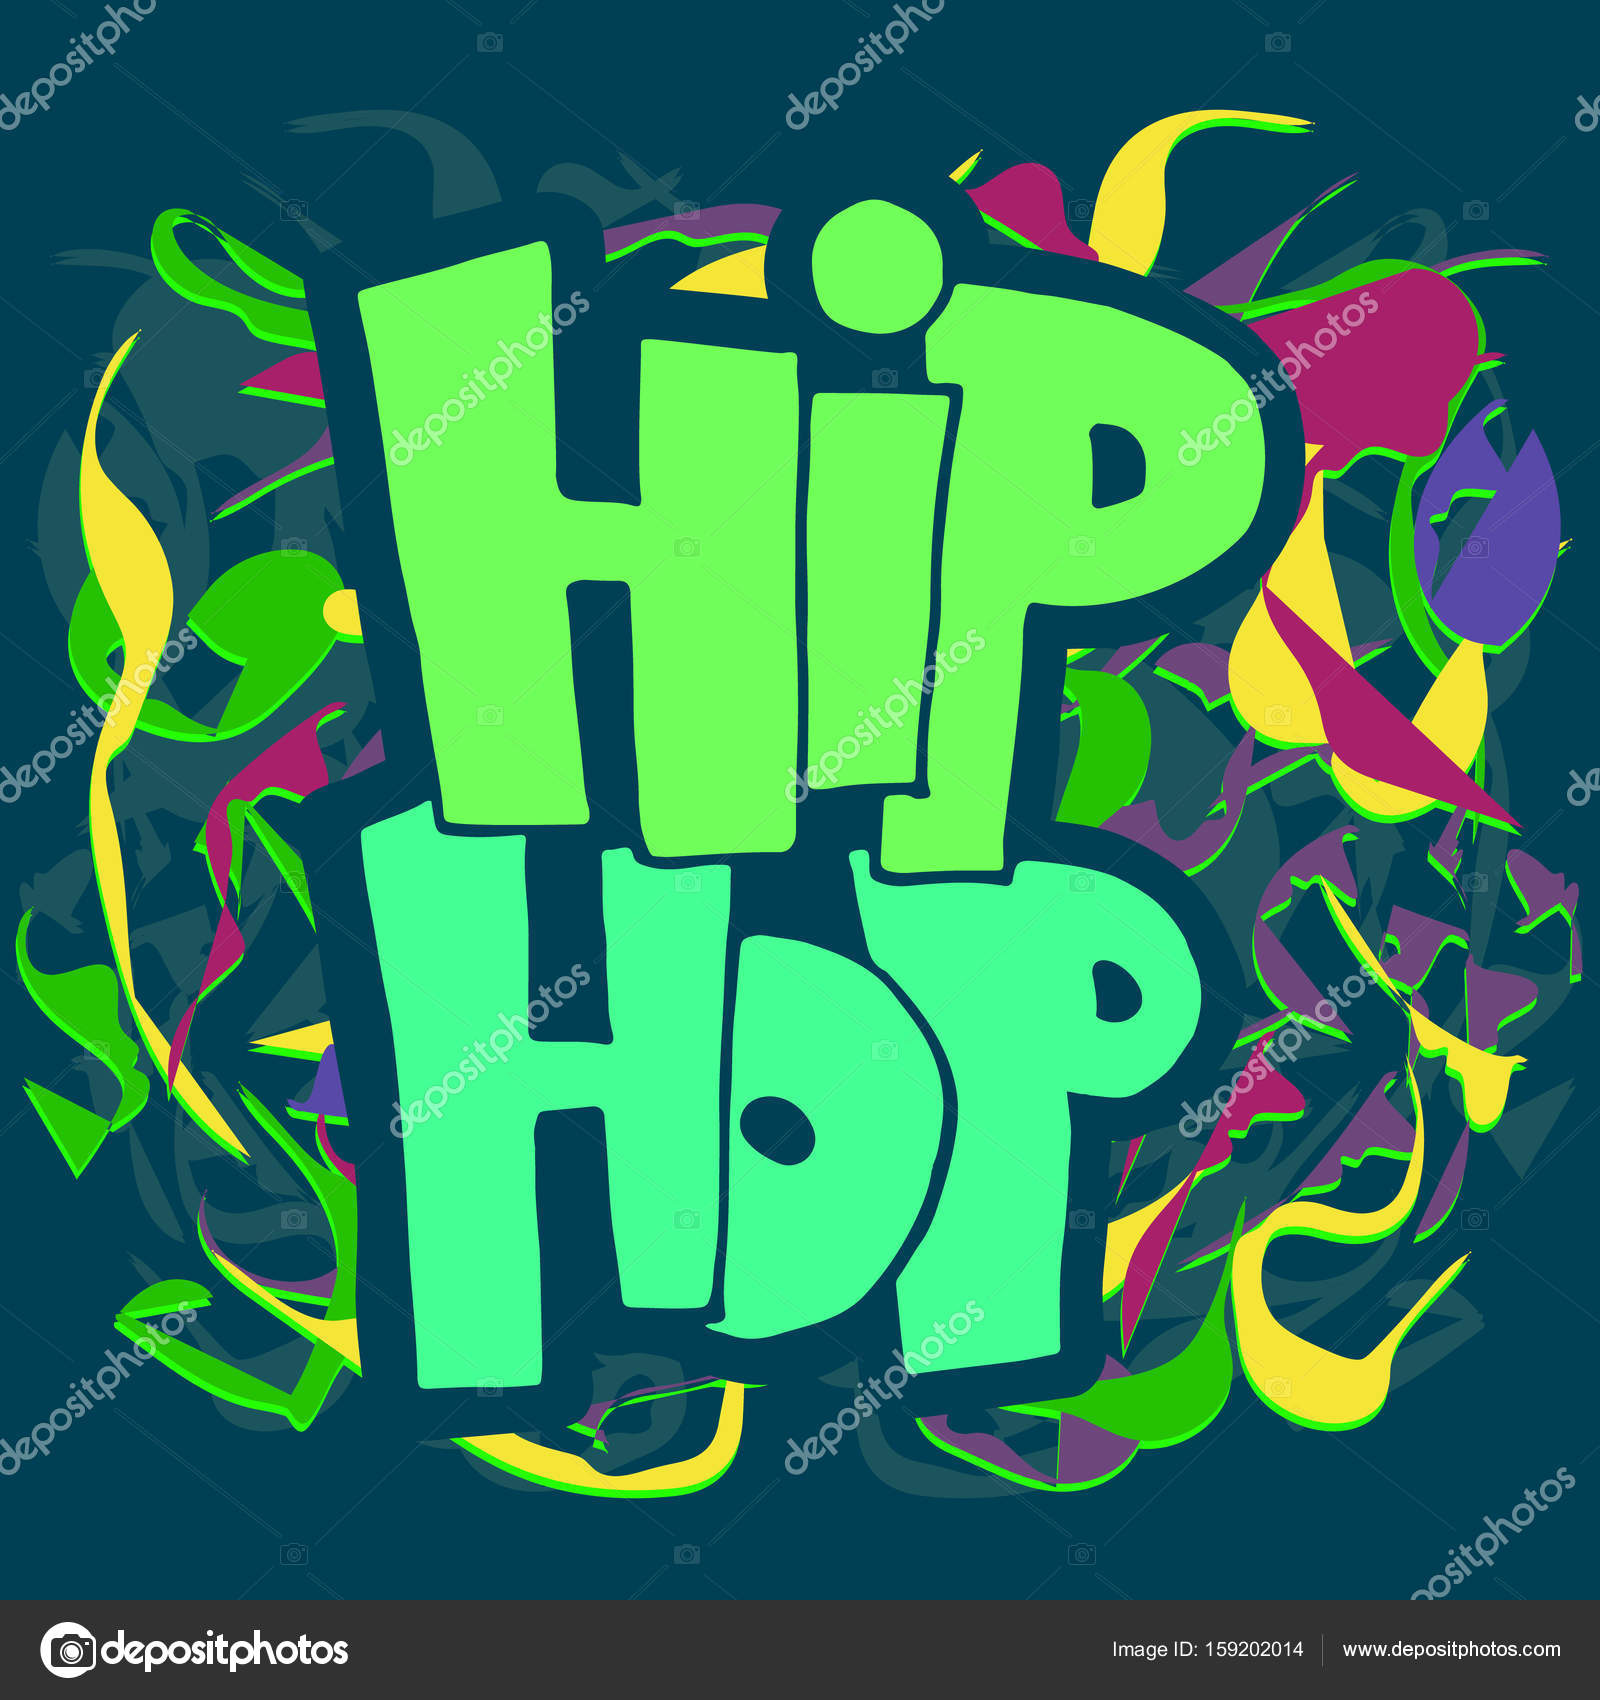 Wallpapers Hip Hop Graffiti Graffiti Of The Phrase Hip Hop